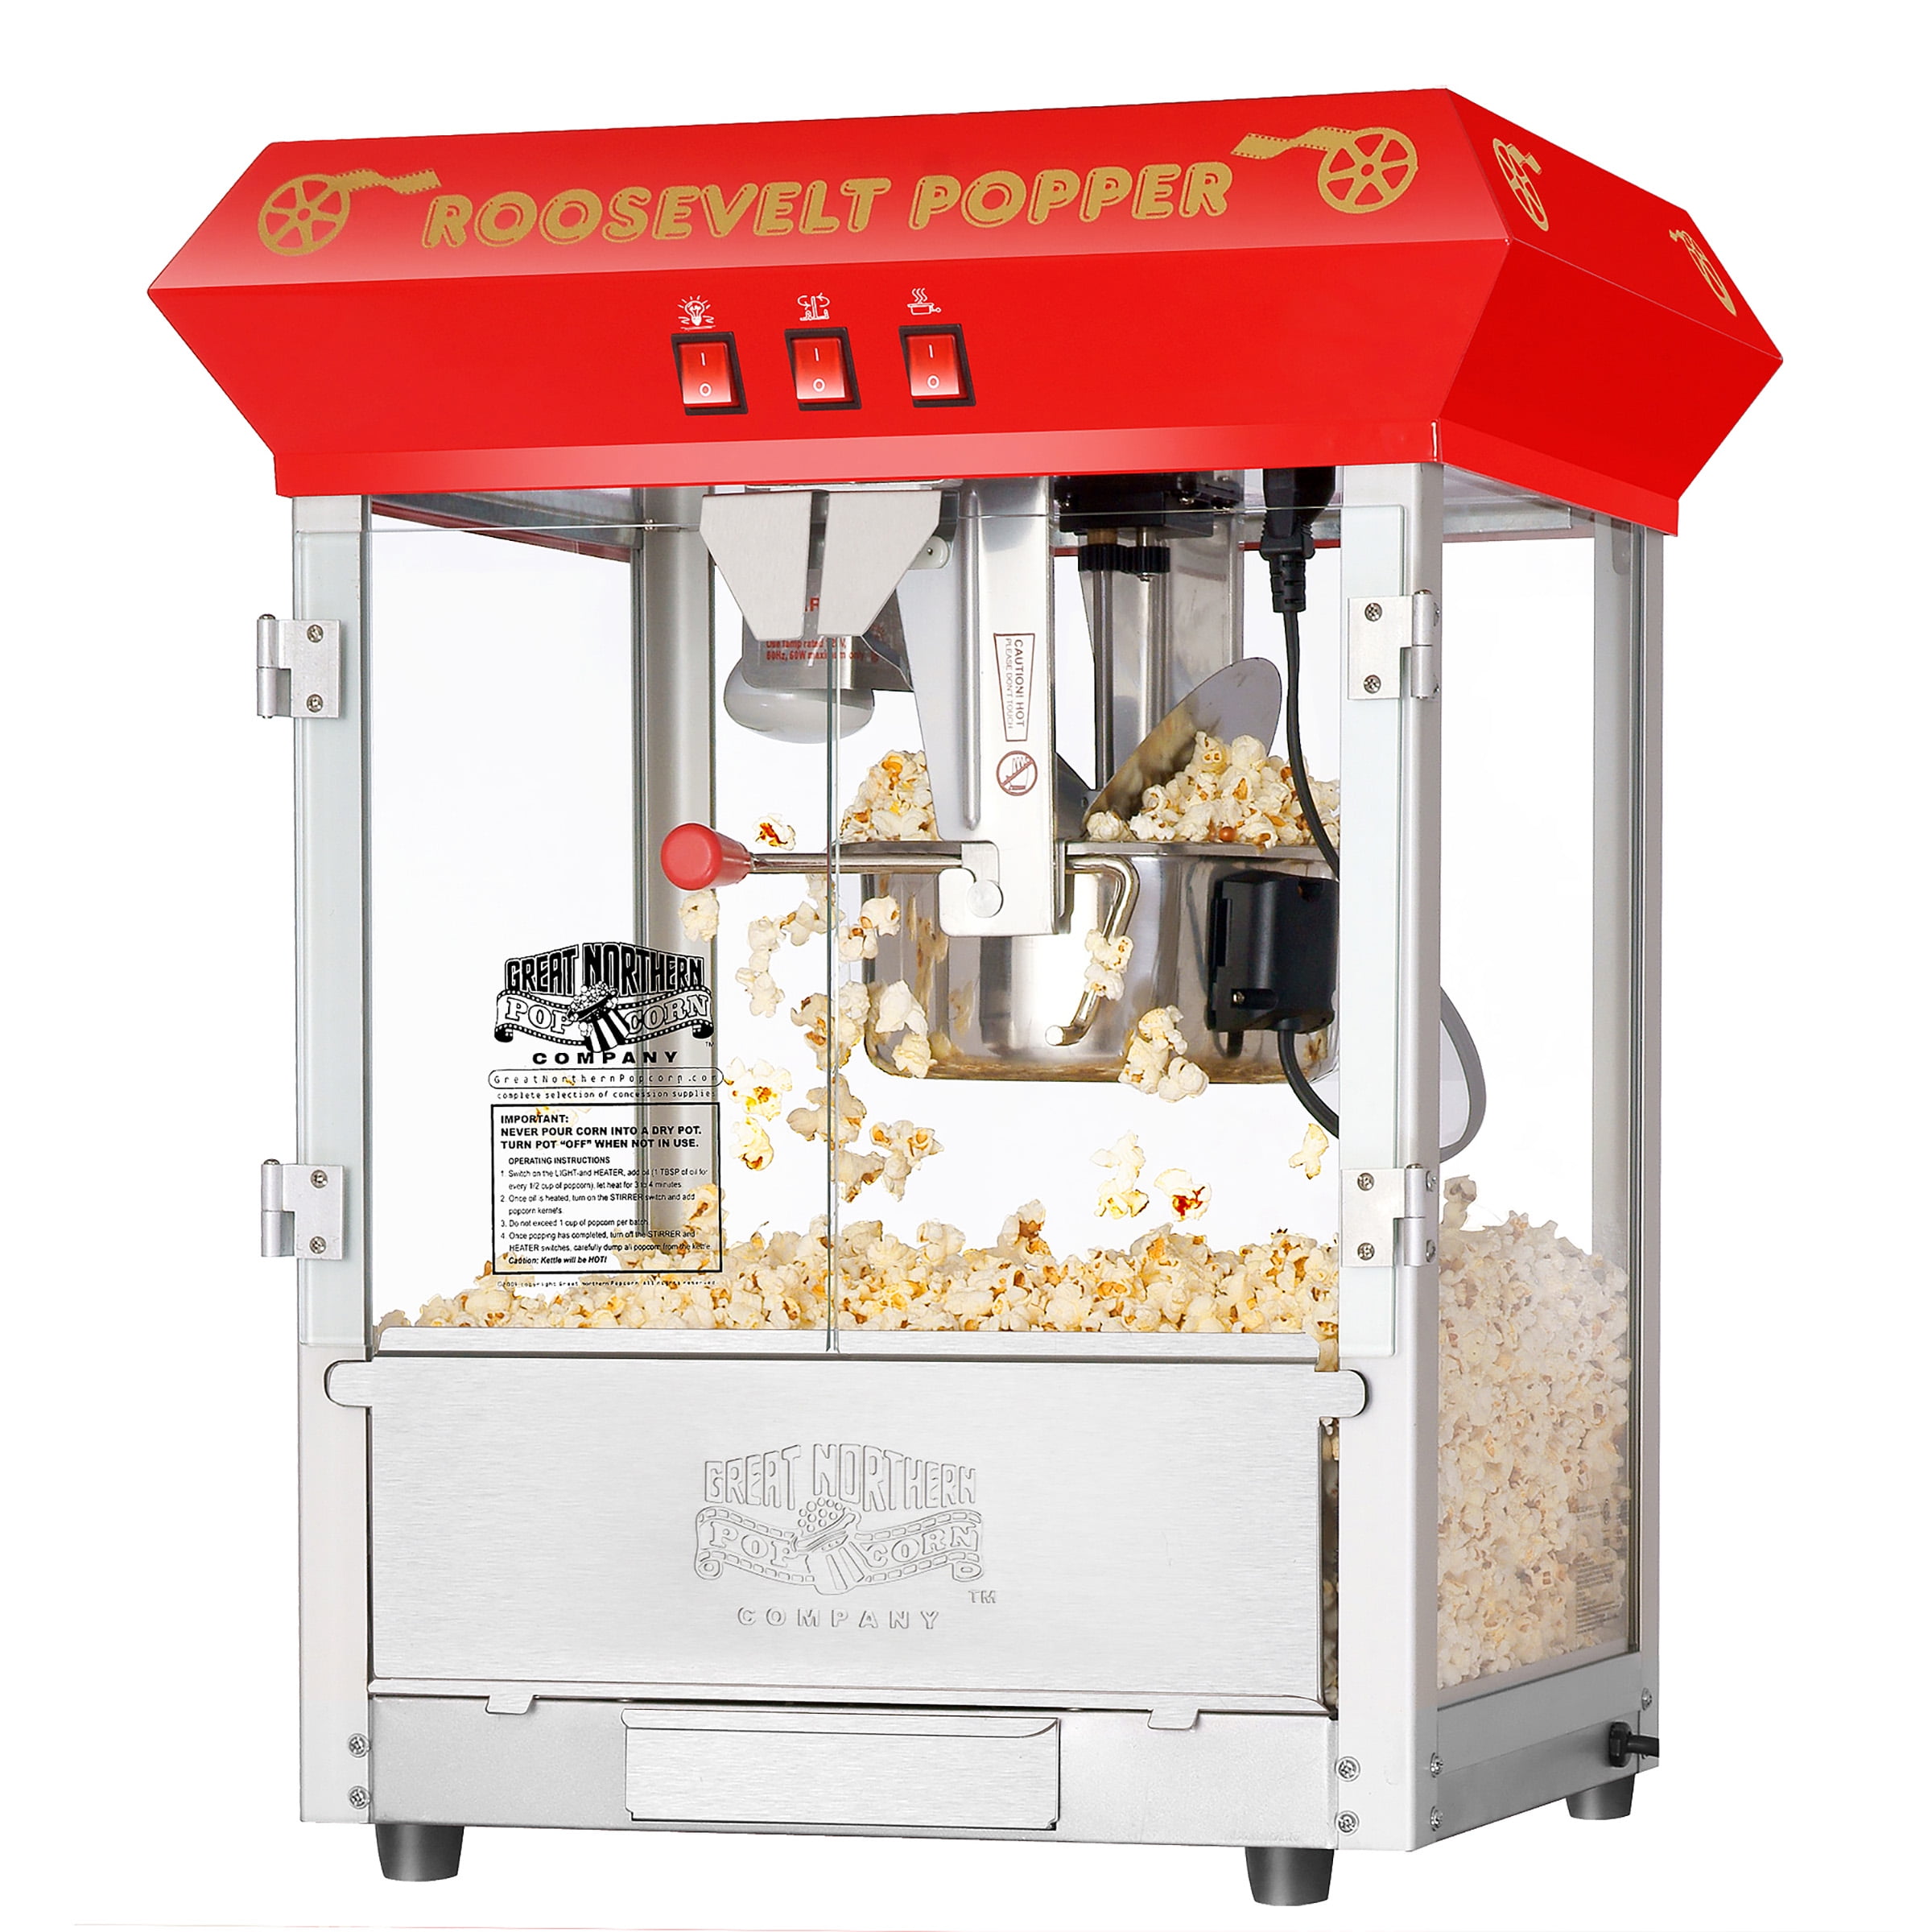 Dash Red Fresh Pop Hot Air Popcorn Maker - World Market